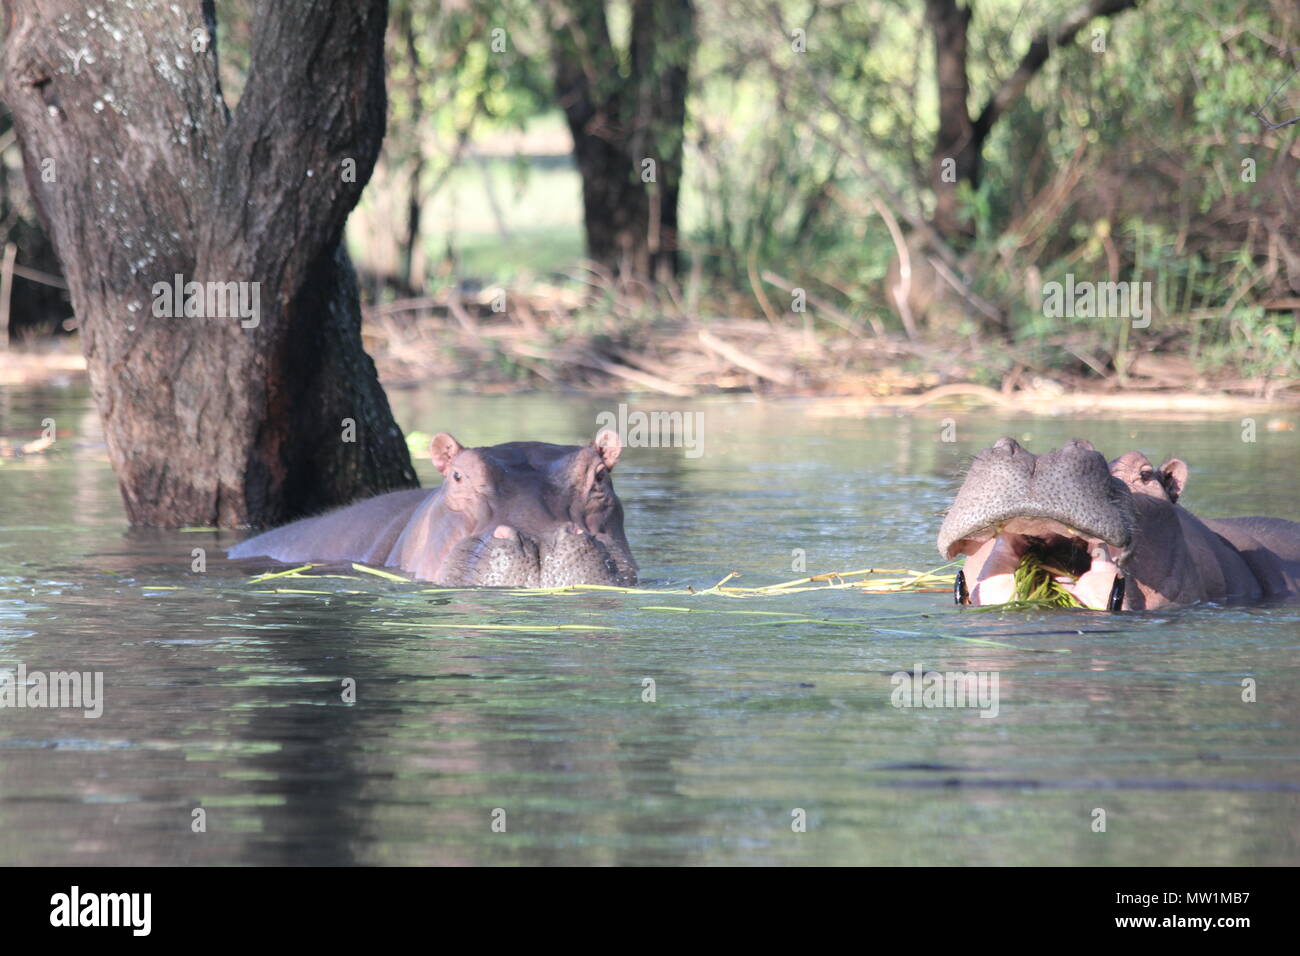 Hippopotamus eating hay in the water Stock Photo